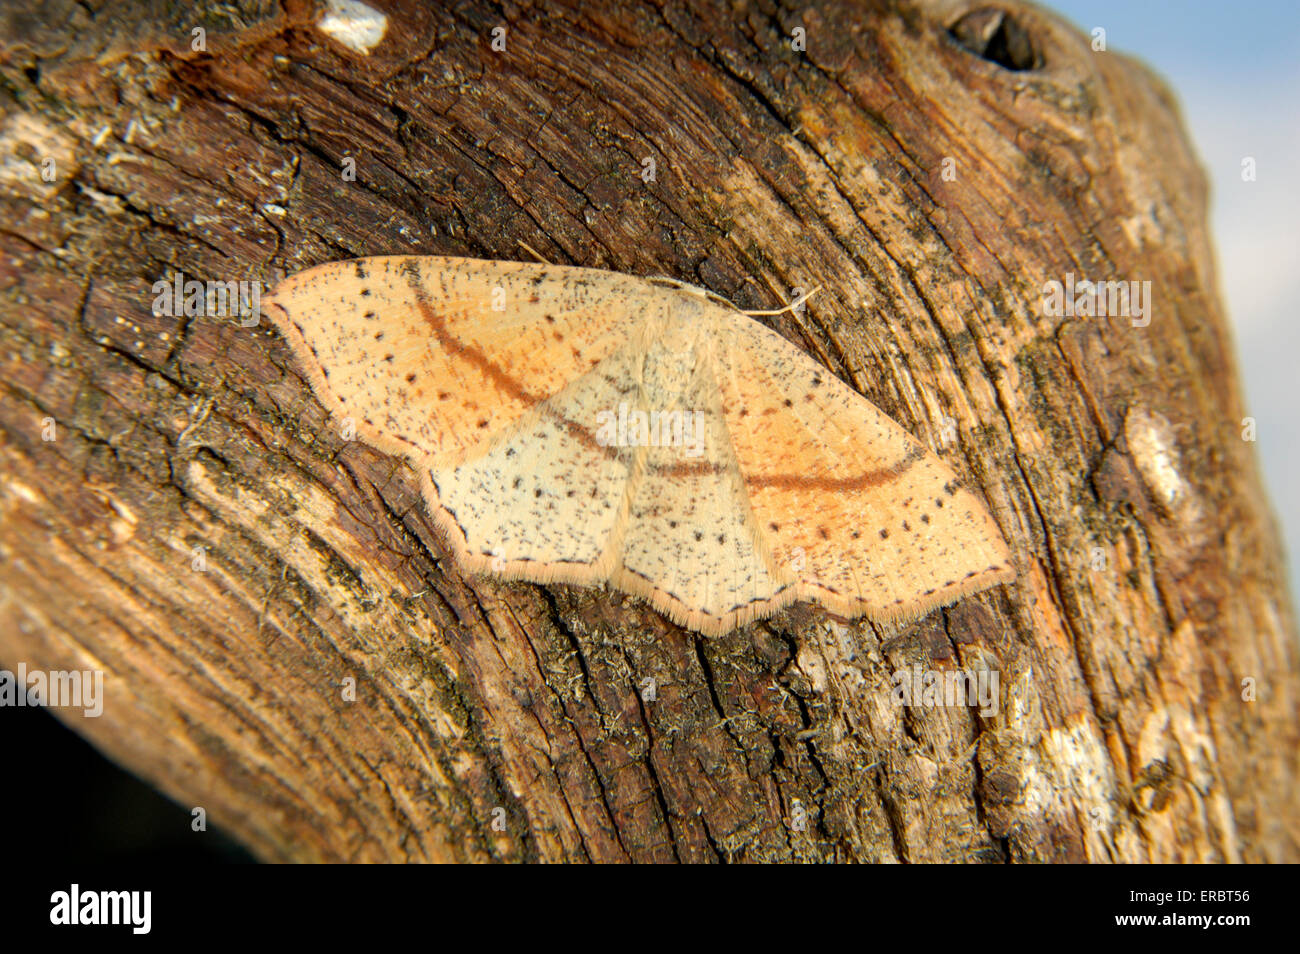 Maiden's Blush - Cyclophora punctaria Stock Photo